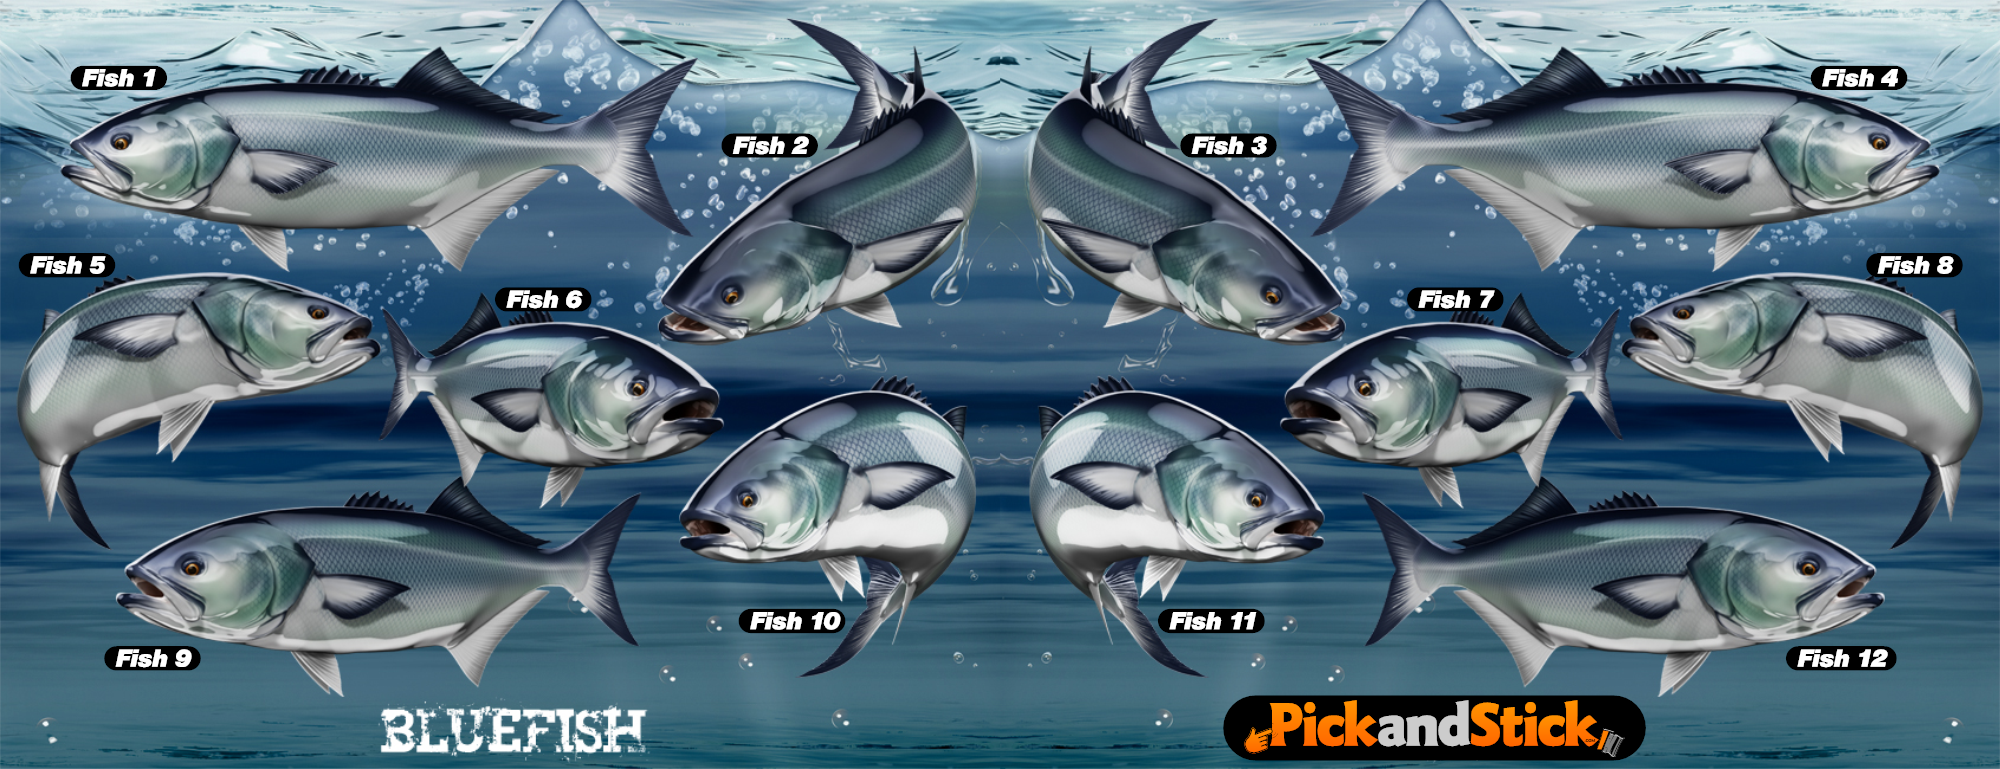 Bluefish Fish Decals - PickandStickcom